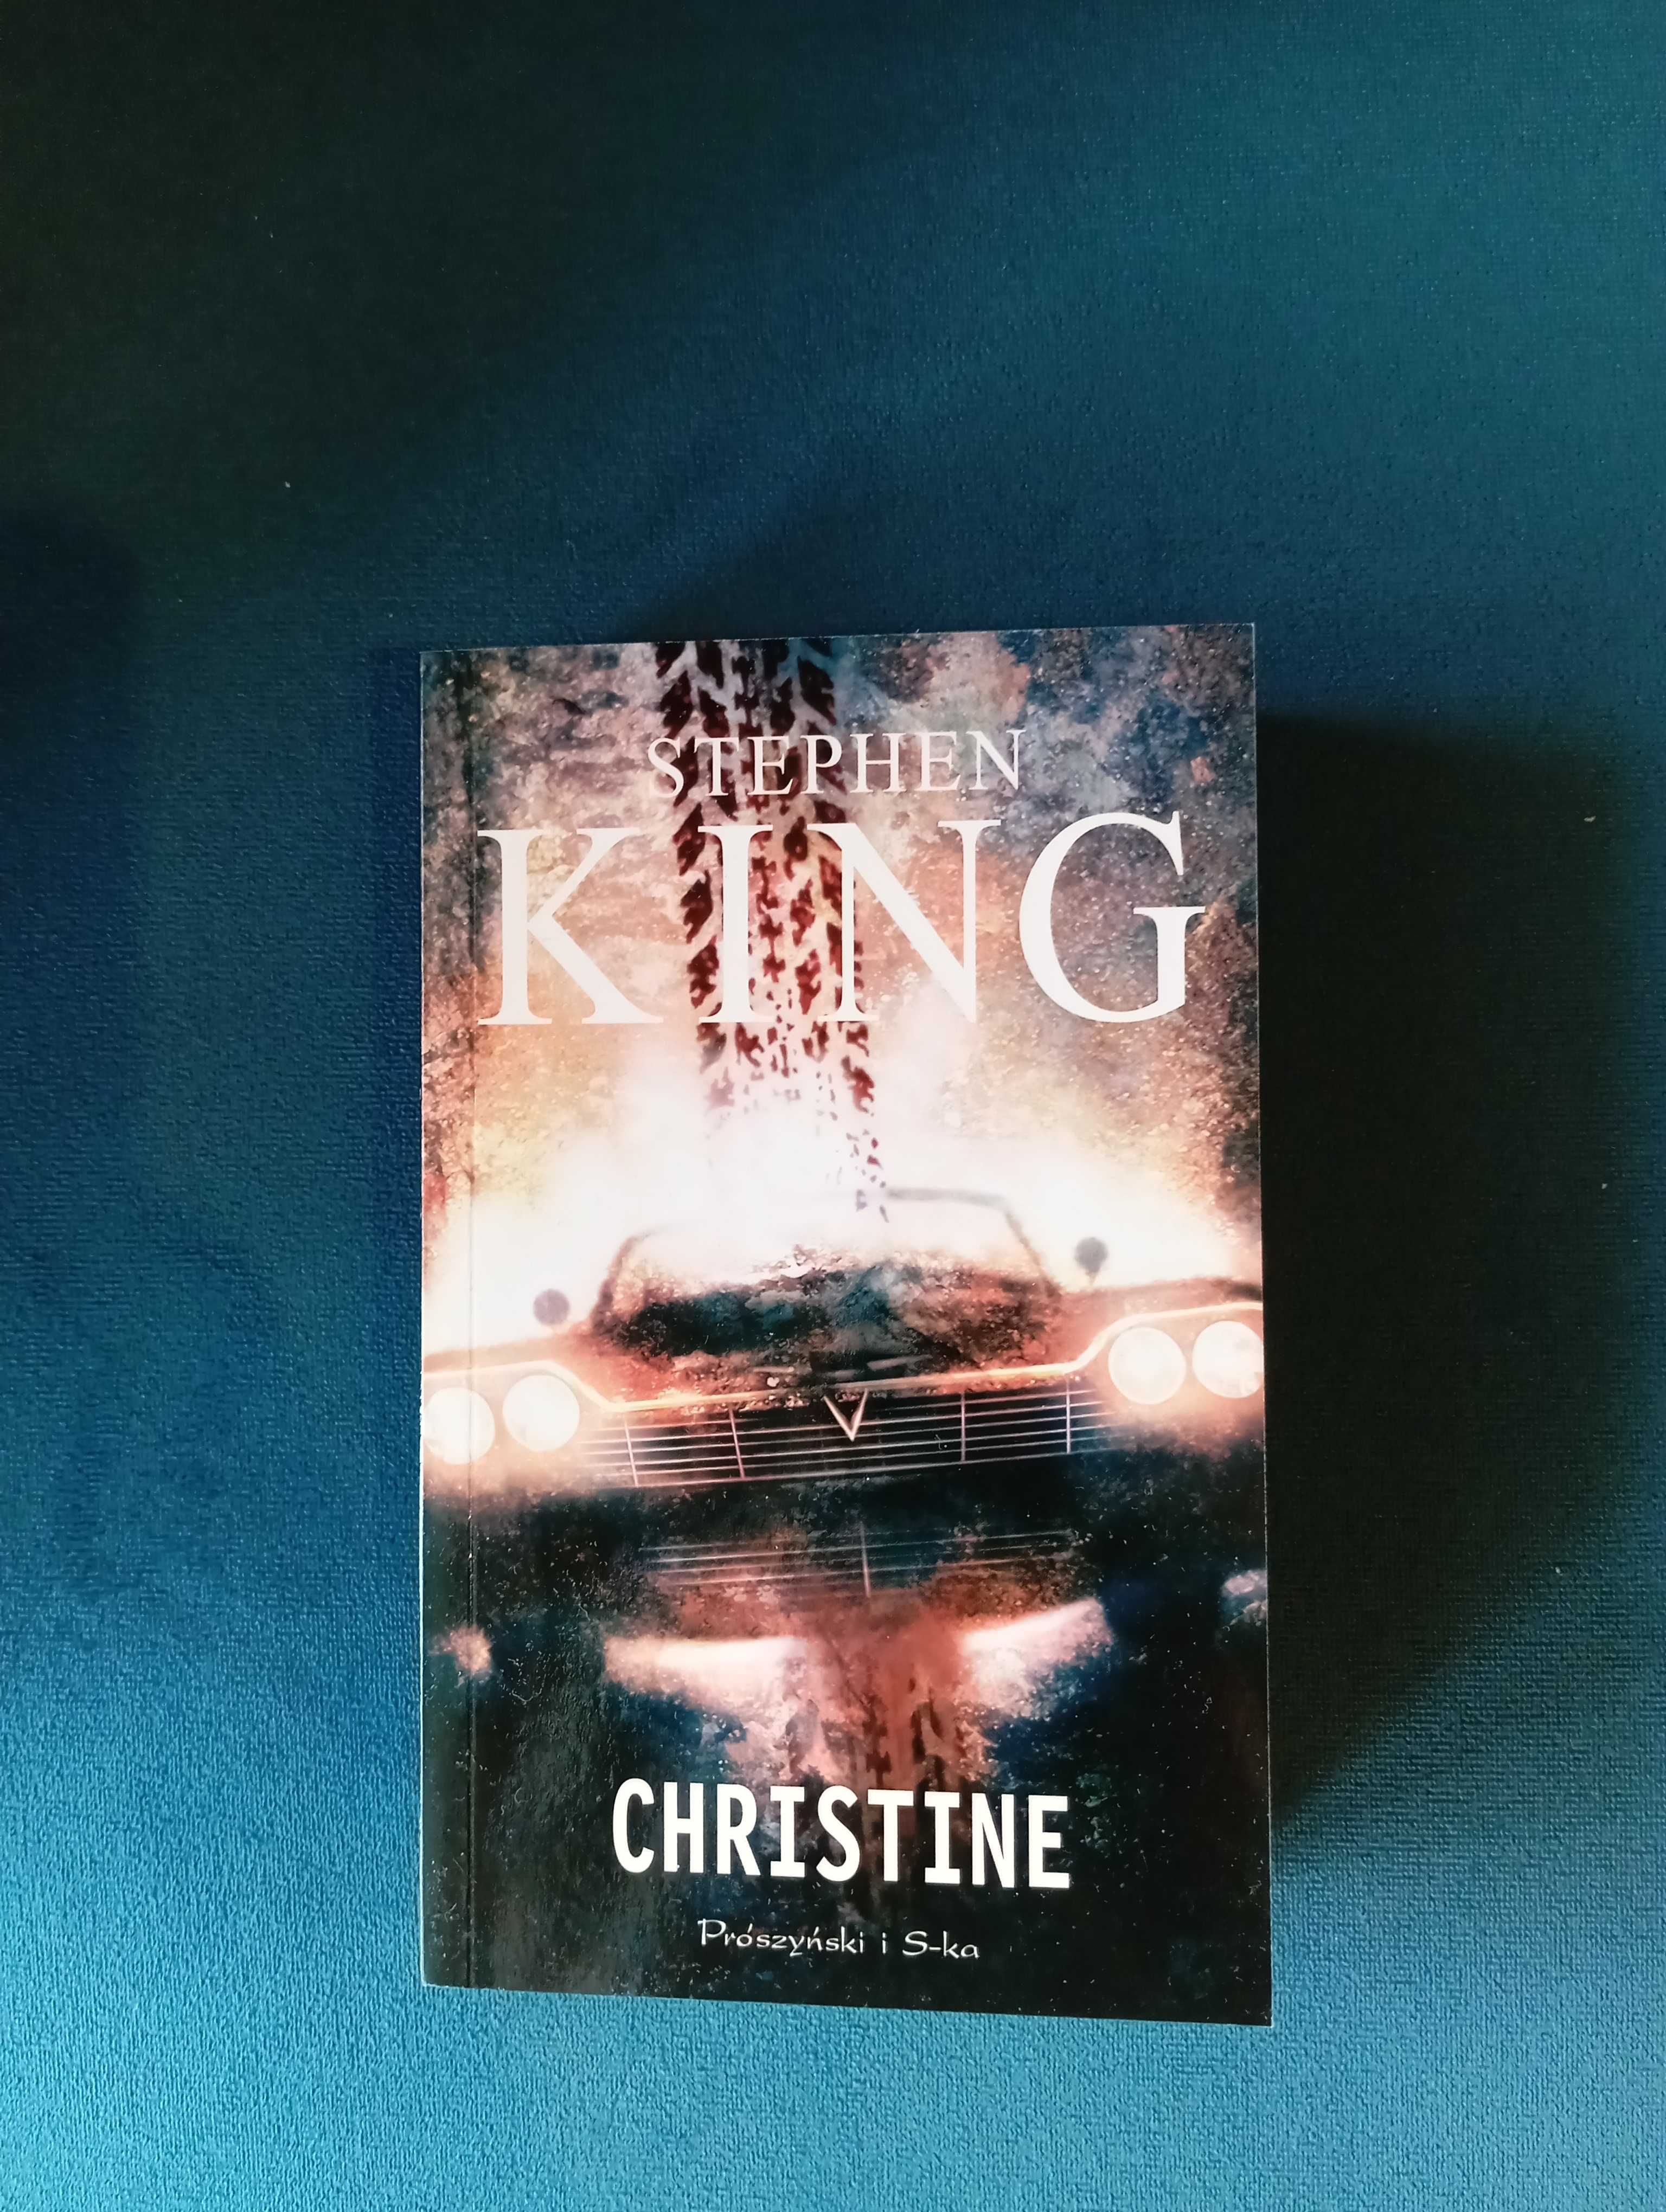 Stephen King "Christine"